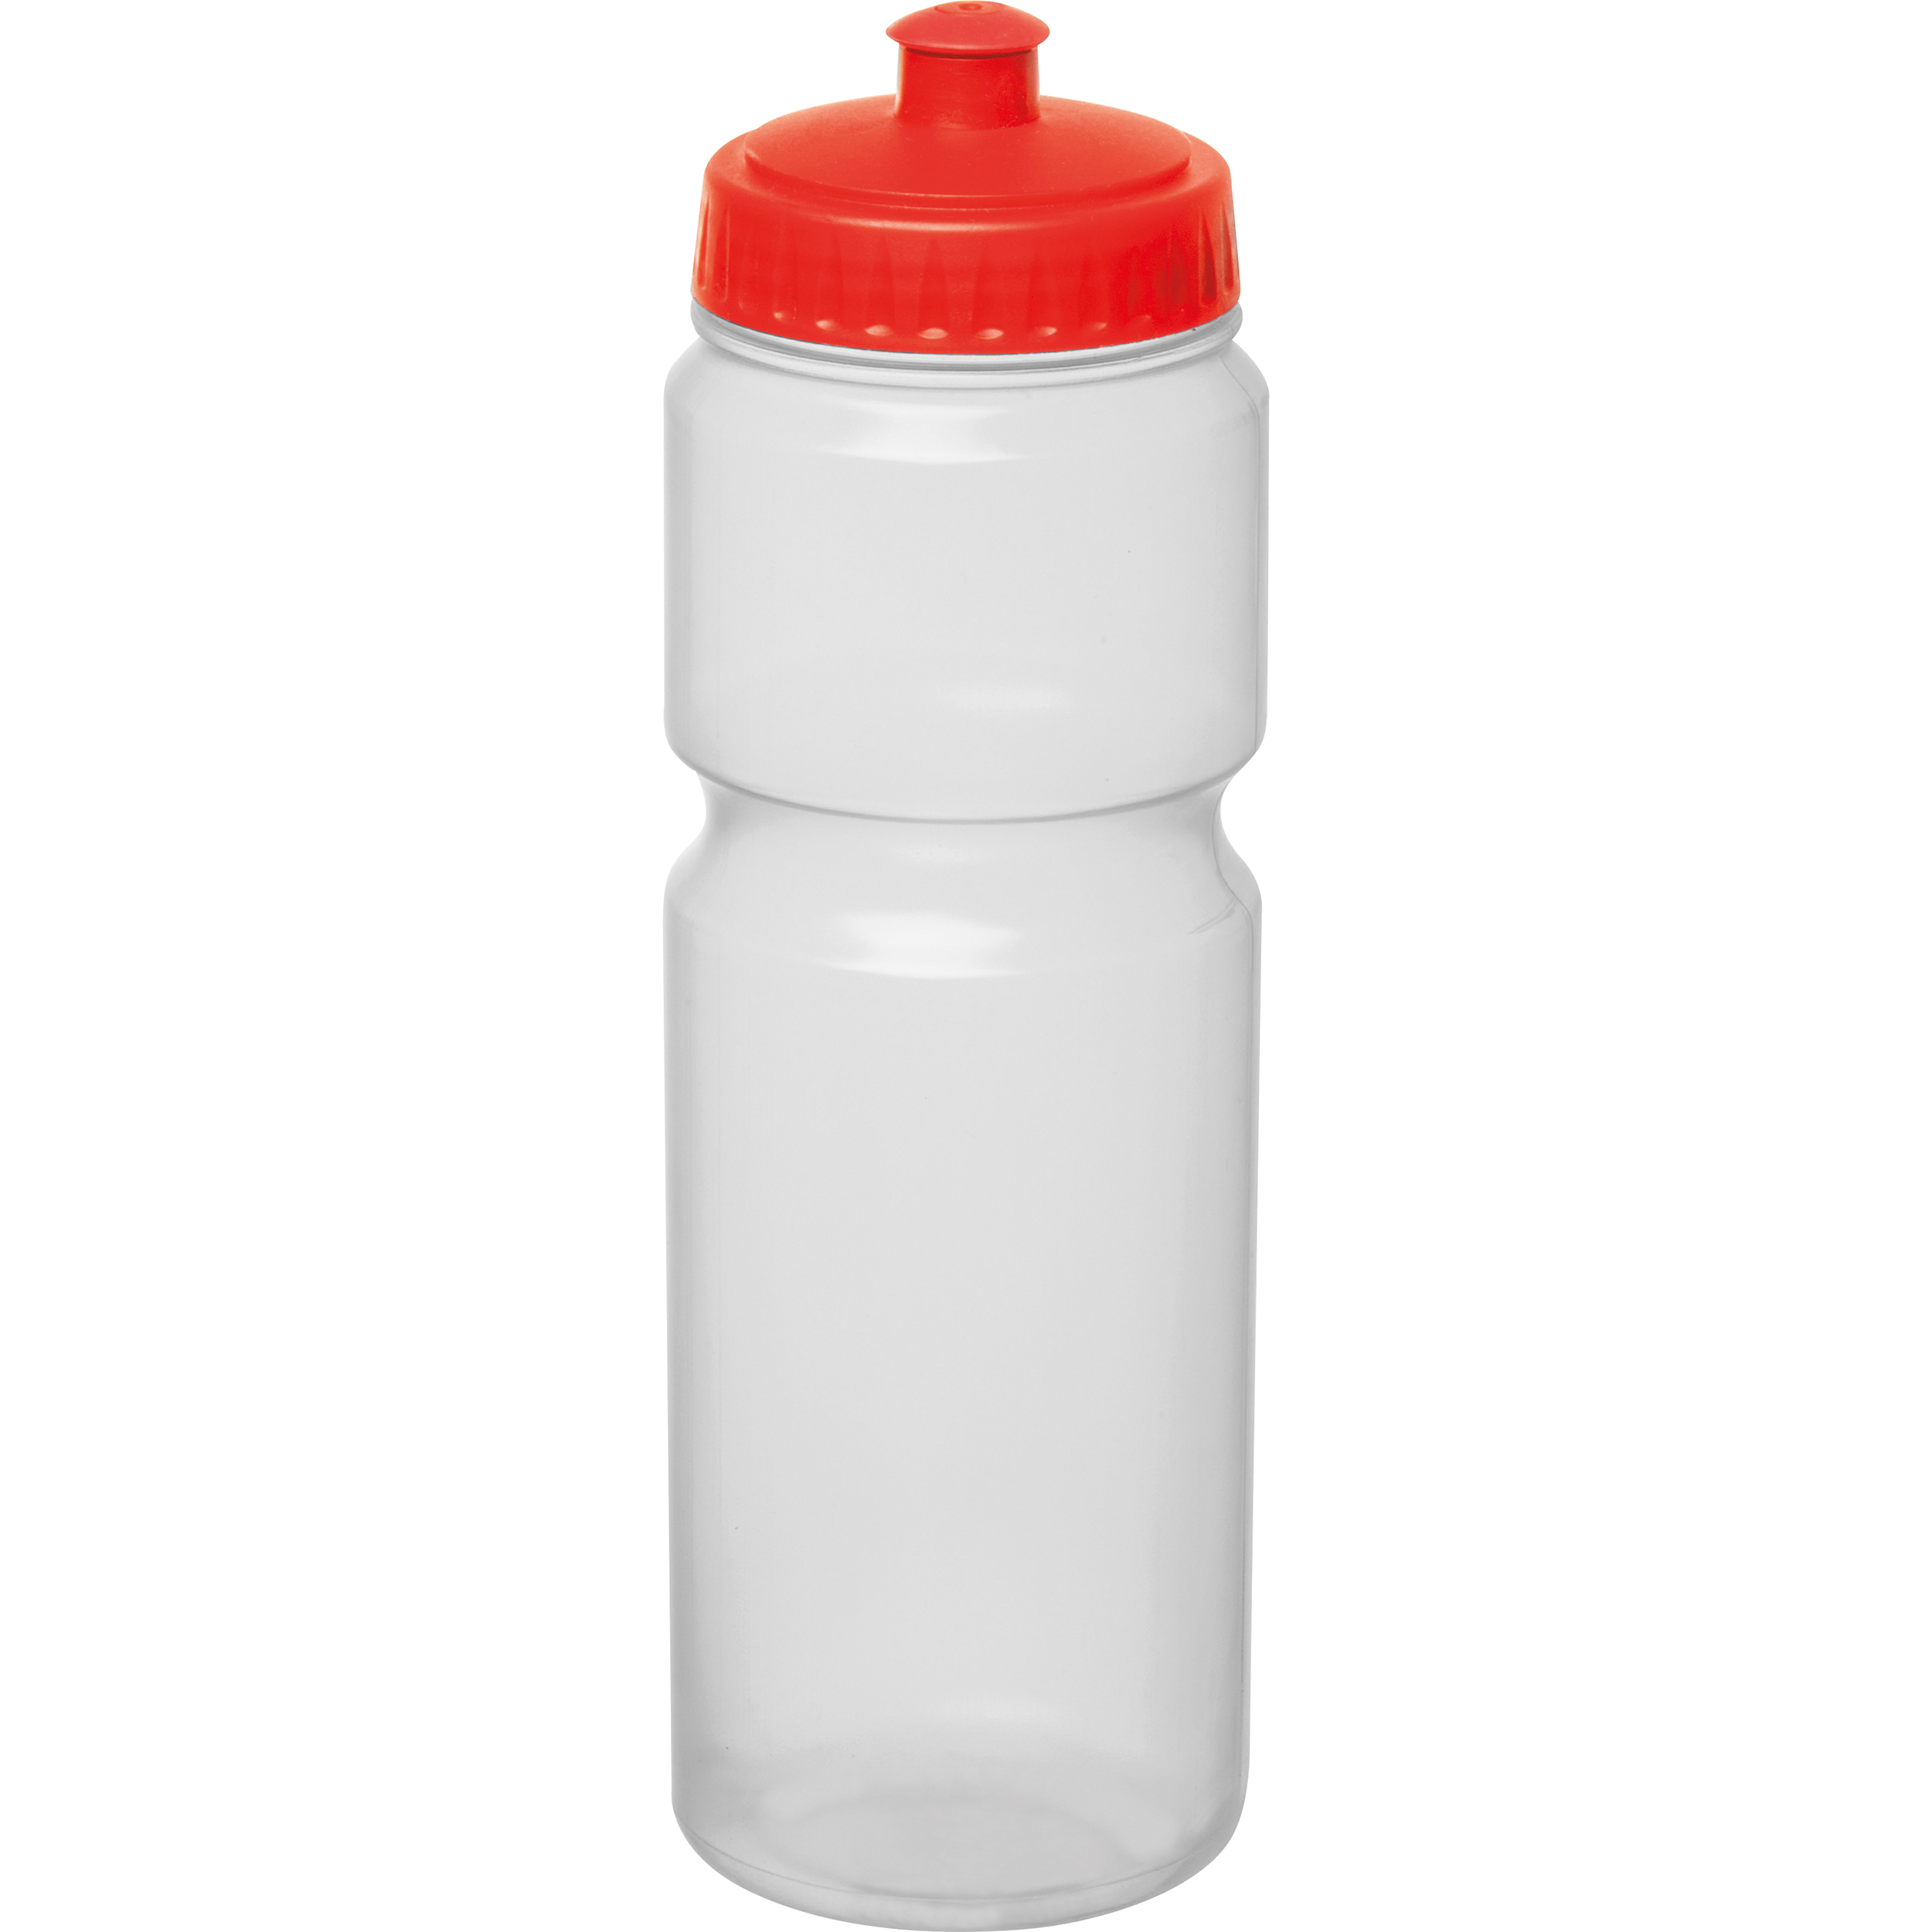 Botella deportiva 750 ml